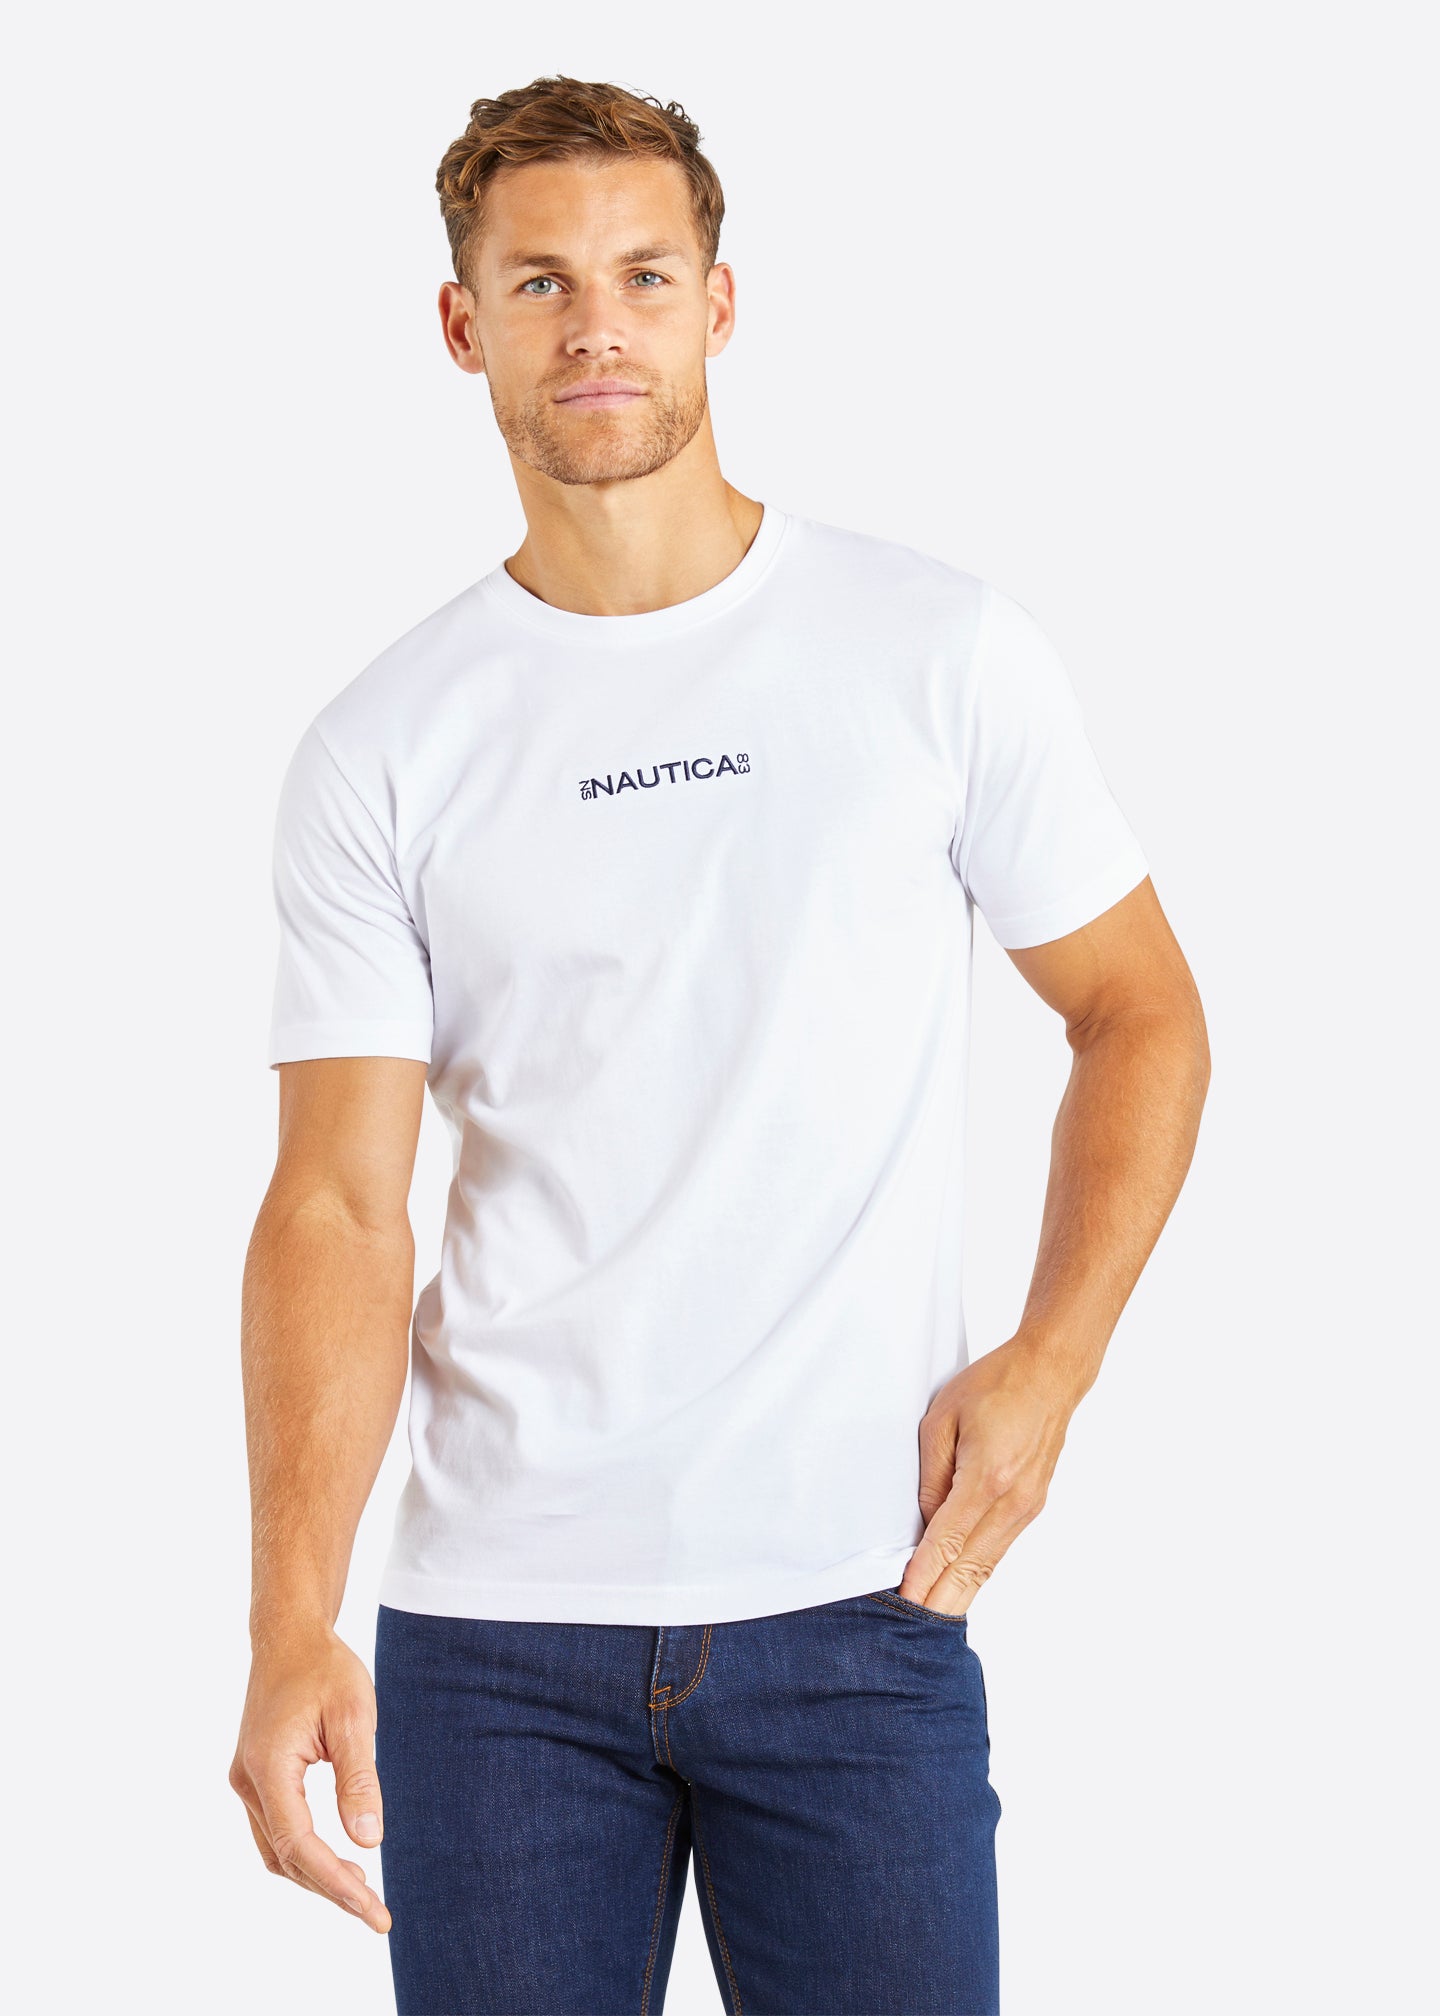 Nautica Ramon T-Shirt - White - Front